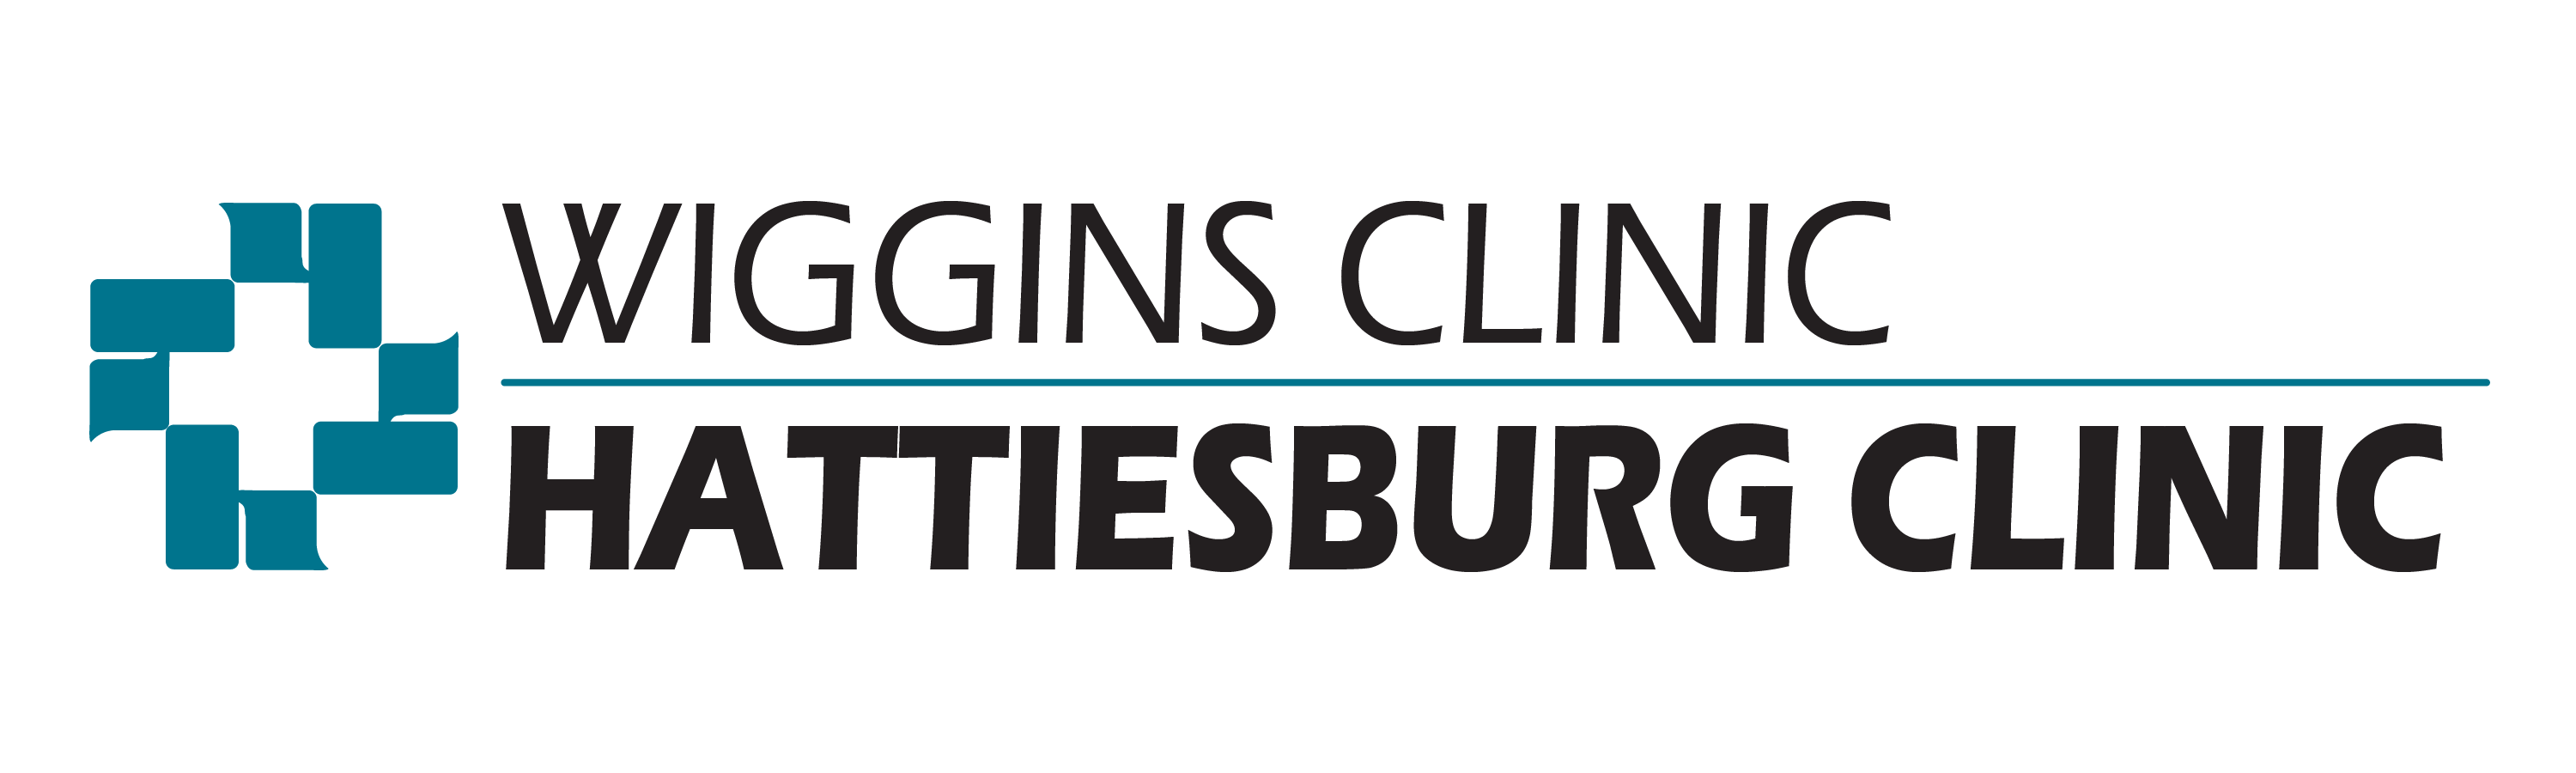 Wiggins Clinic logo